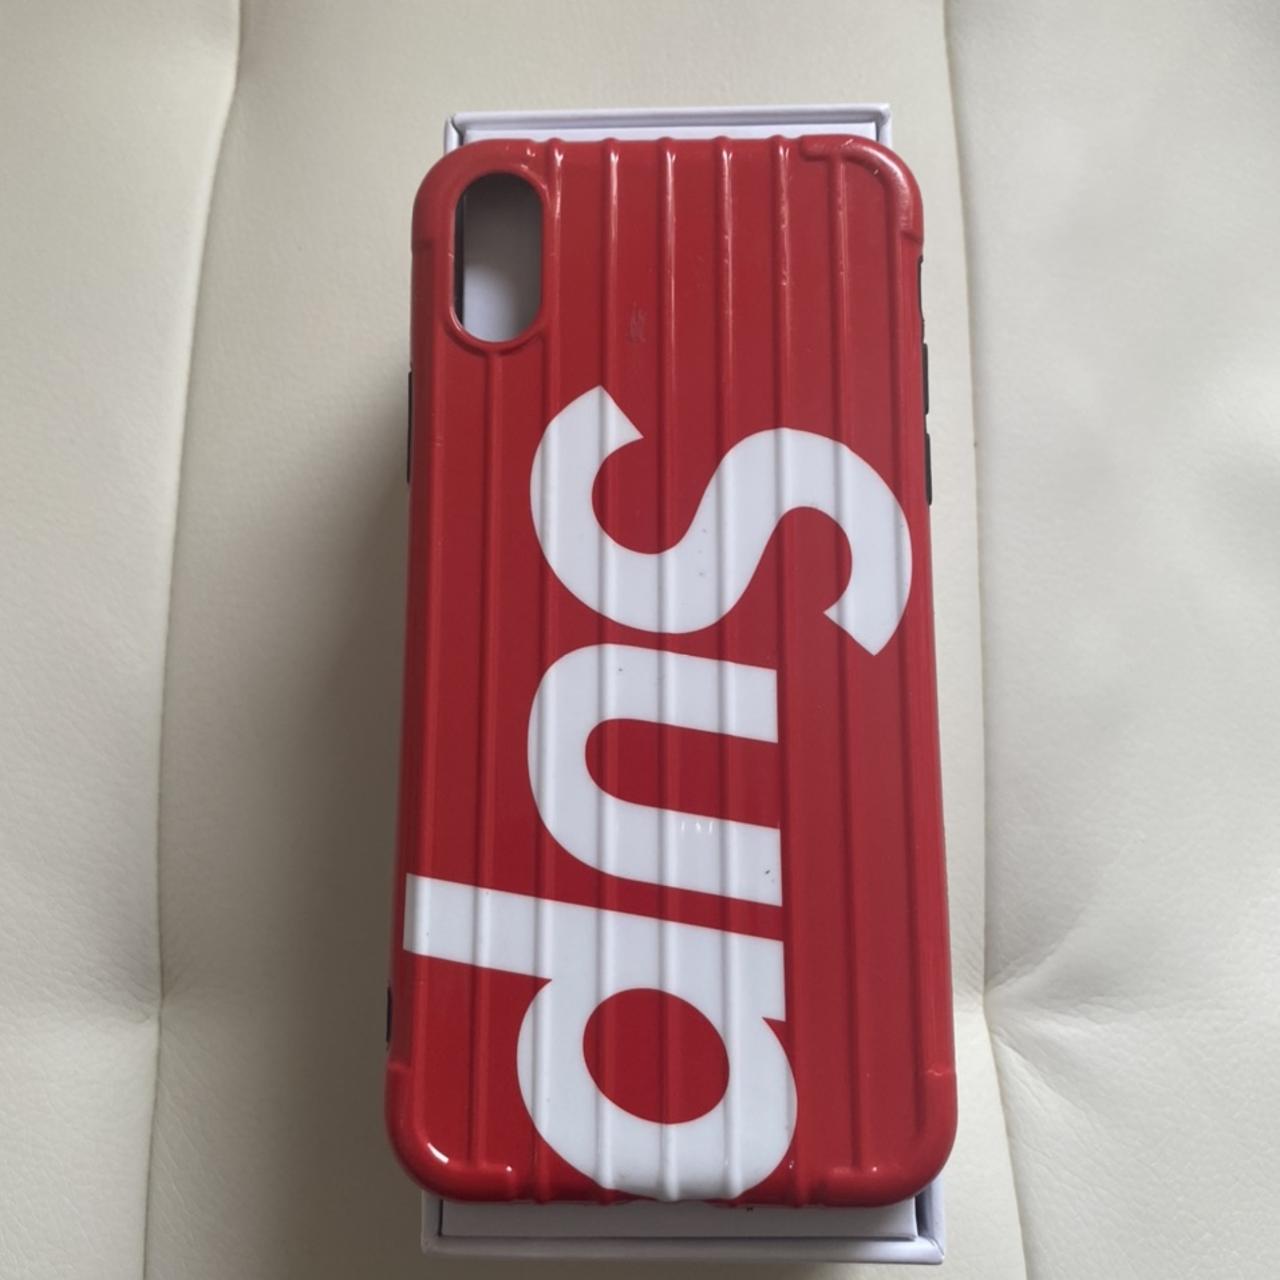 supreme phone case iphone xr